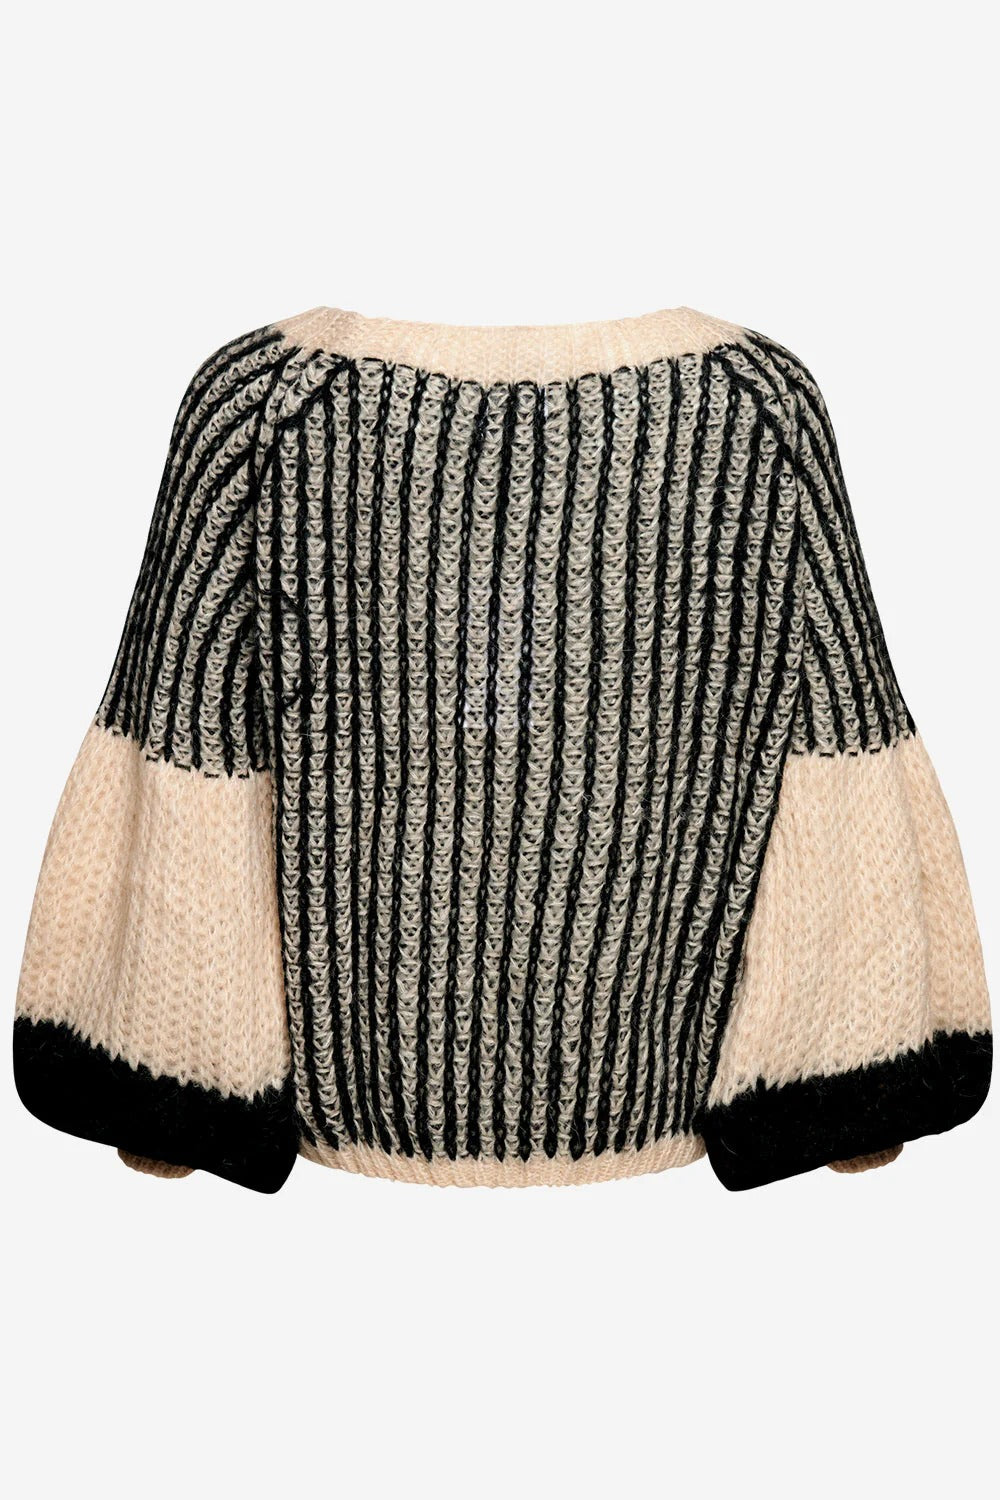 Liana knit sweater cream/black